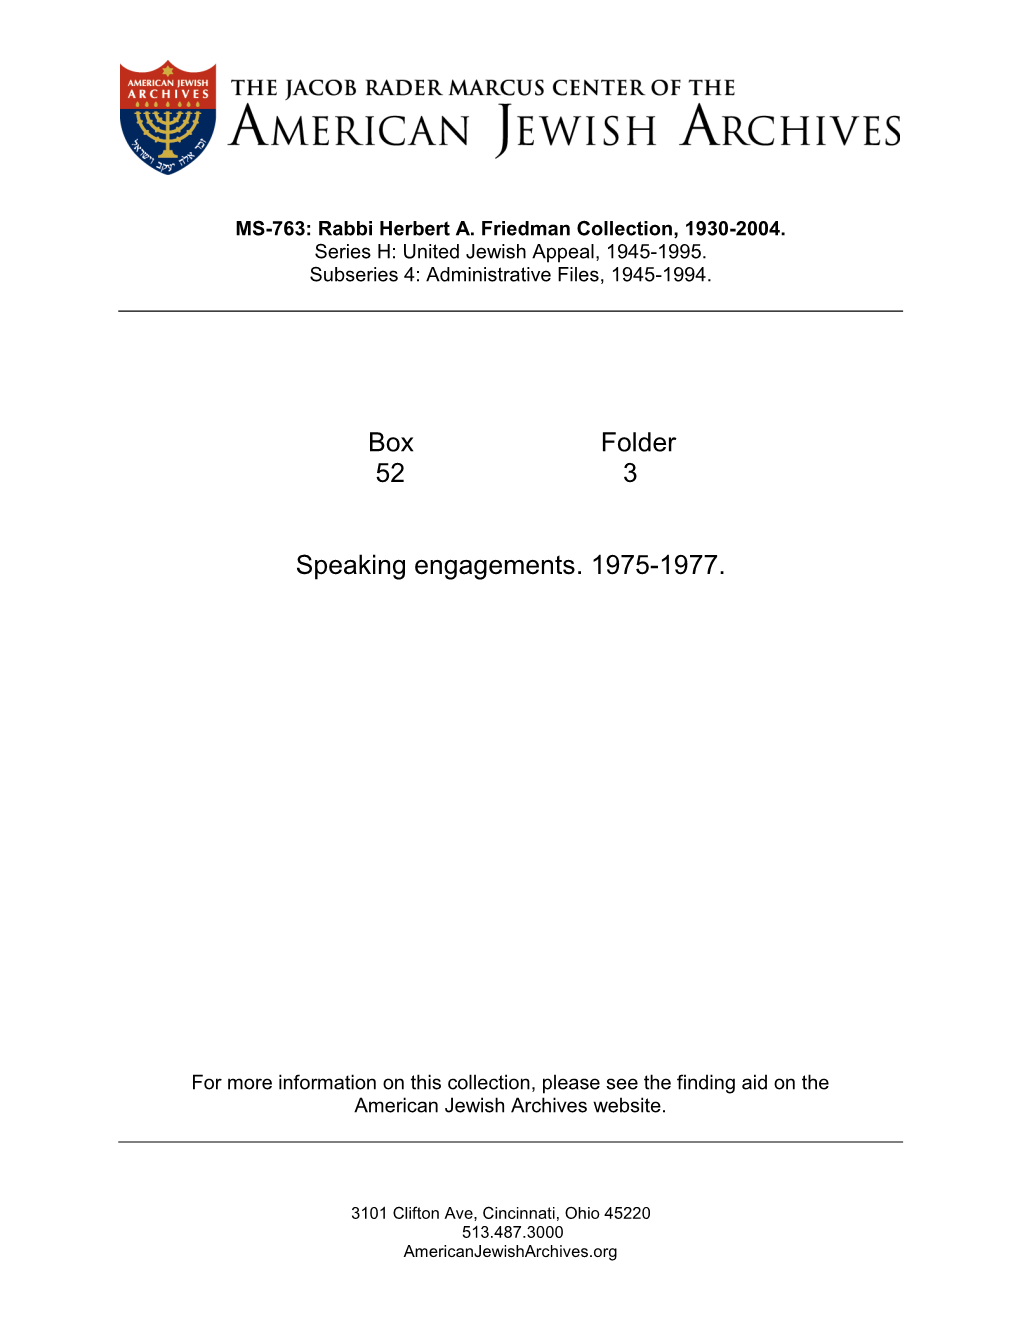 Box Folder 52 3 Speaking Engagements. 1975-1977